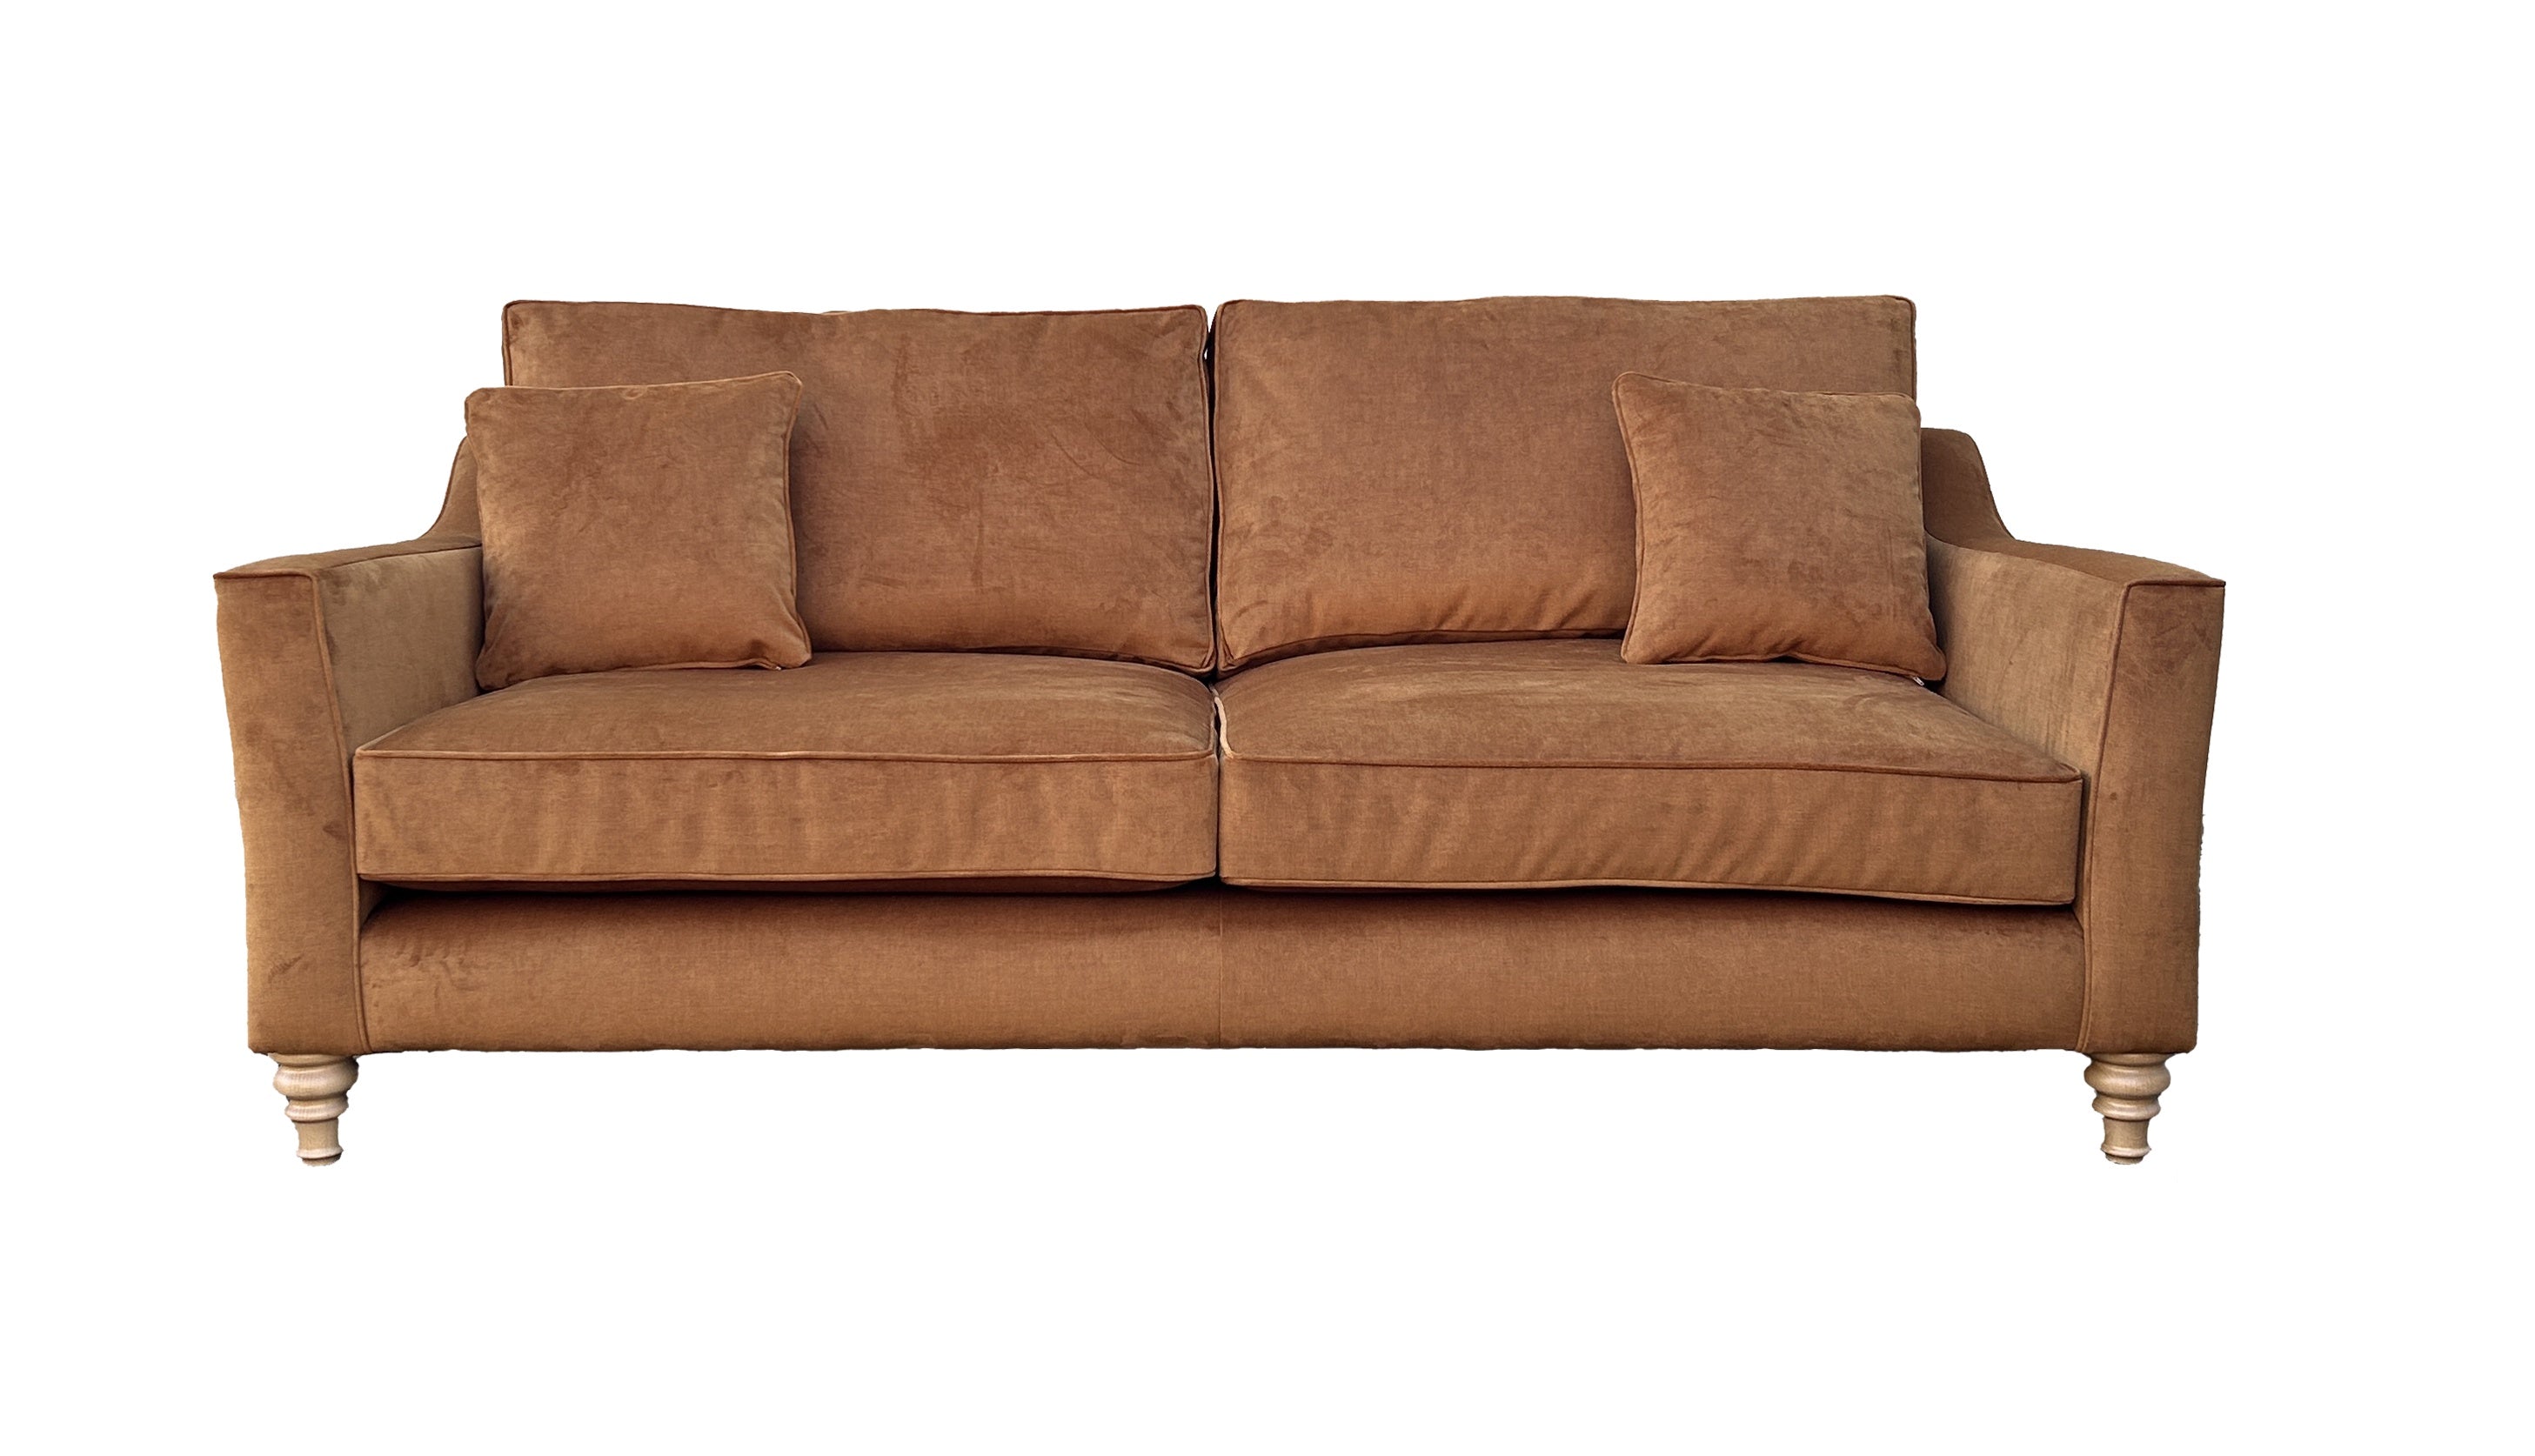 Marlow 3 Seater Sofa